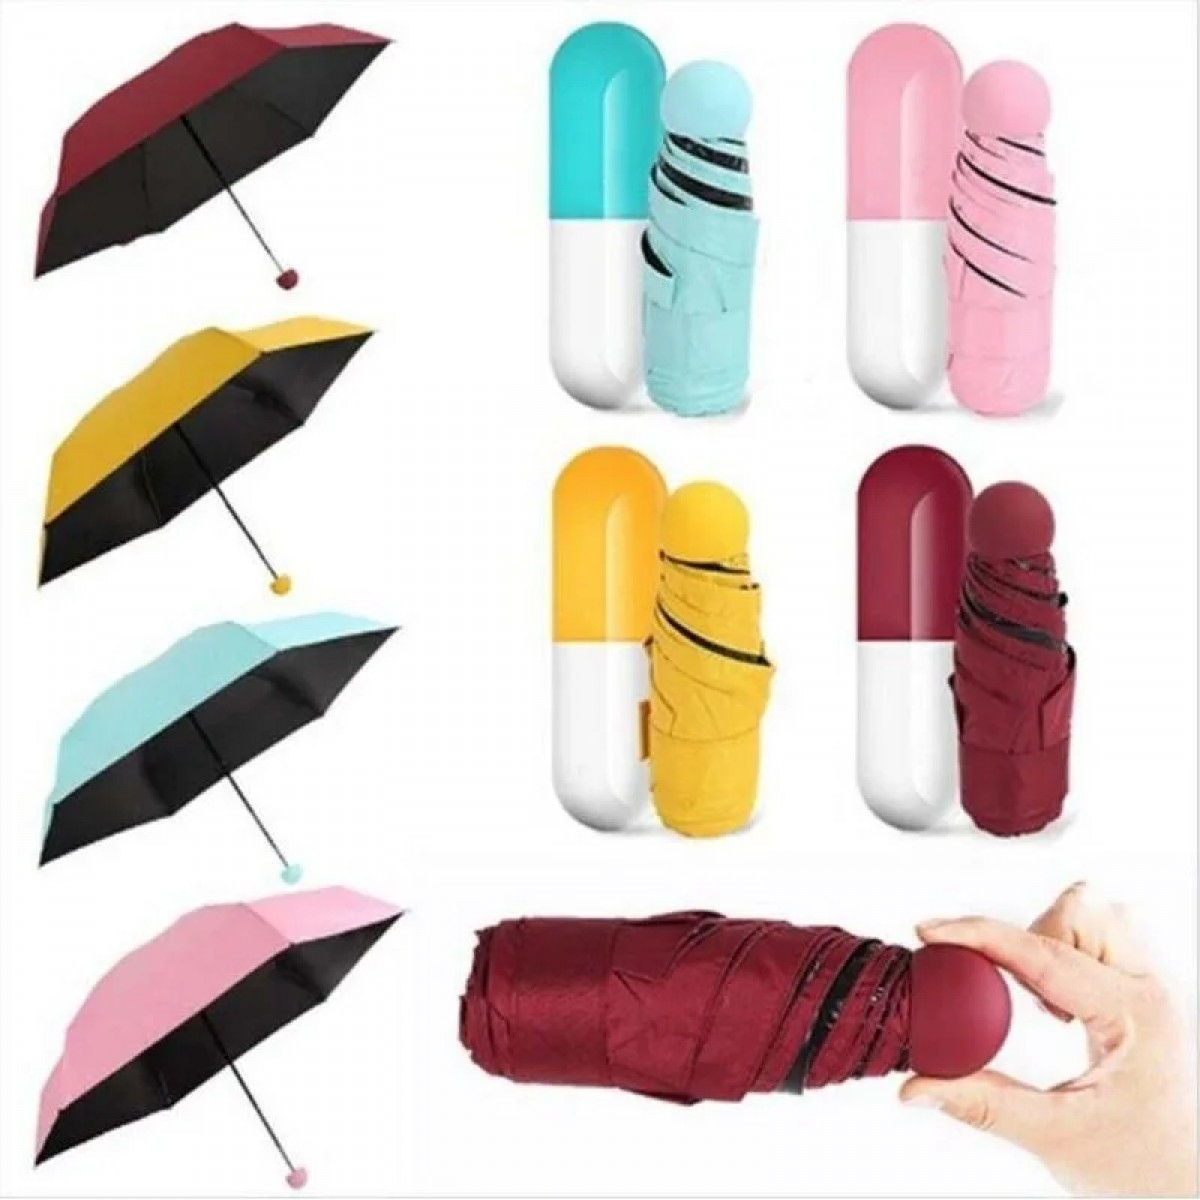 Міні-парасолька Mybrella у футлярі рожева парасолька молодіжна якісна парасолька від дощу парасолька в капсулі